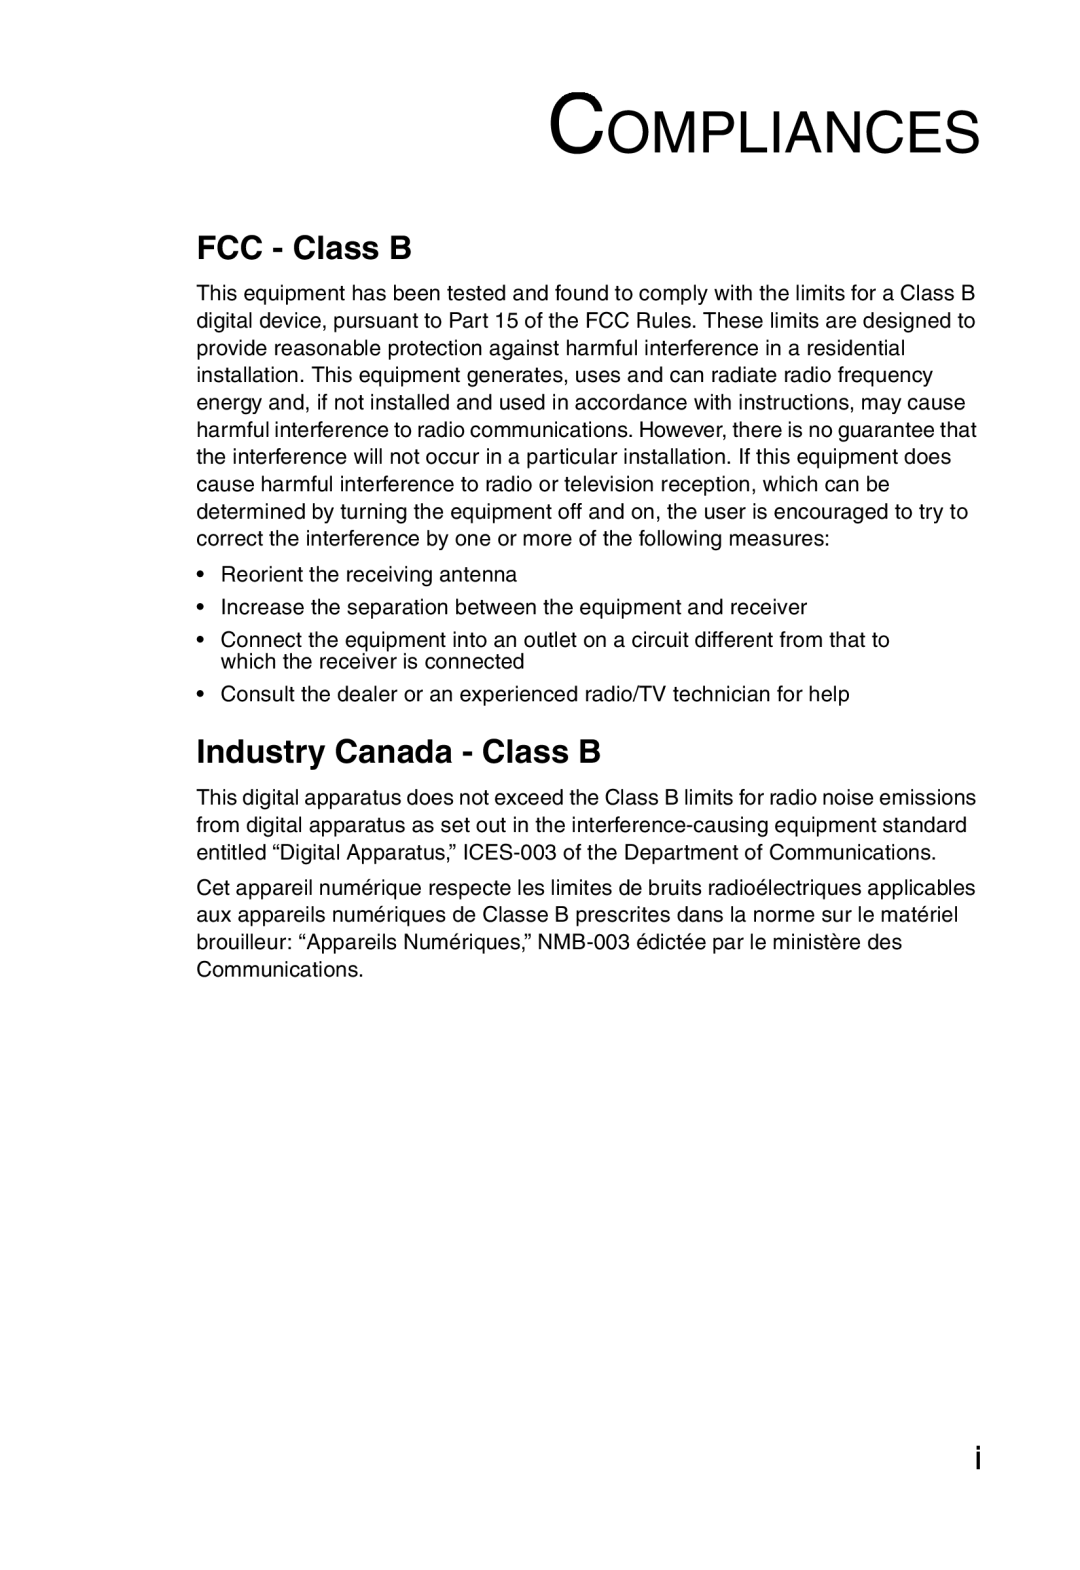 Sharp S M C 7 0 0 4 A B R, SMC7004ABR manual Compliances, FCC - Class B, Industry Canada - Class B 